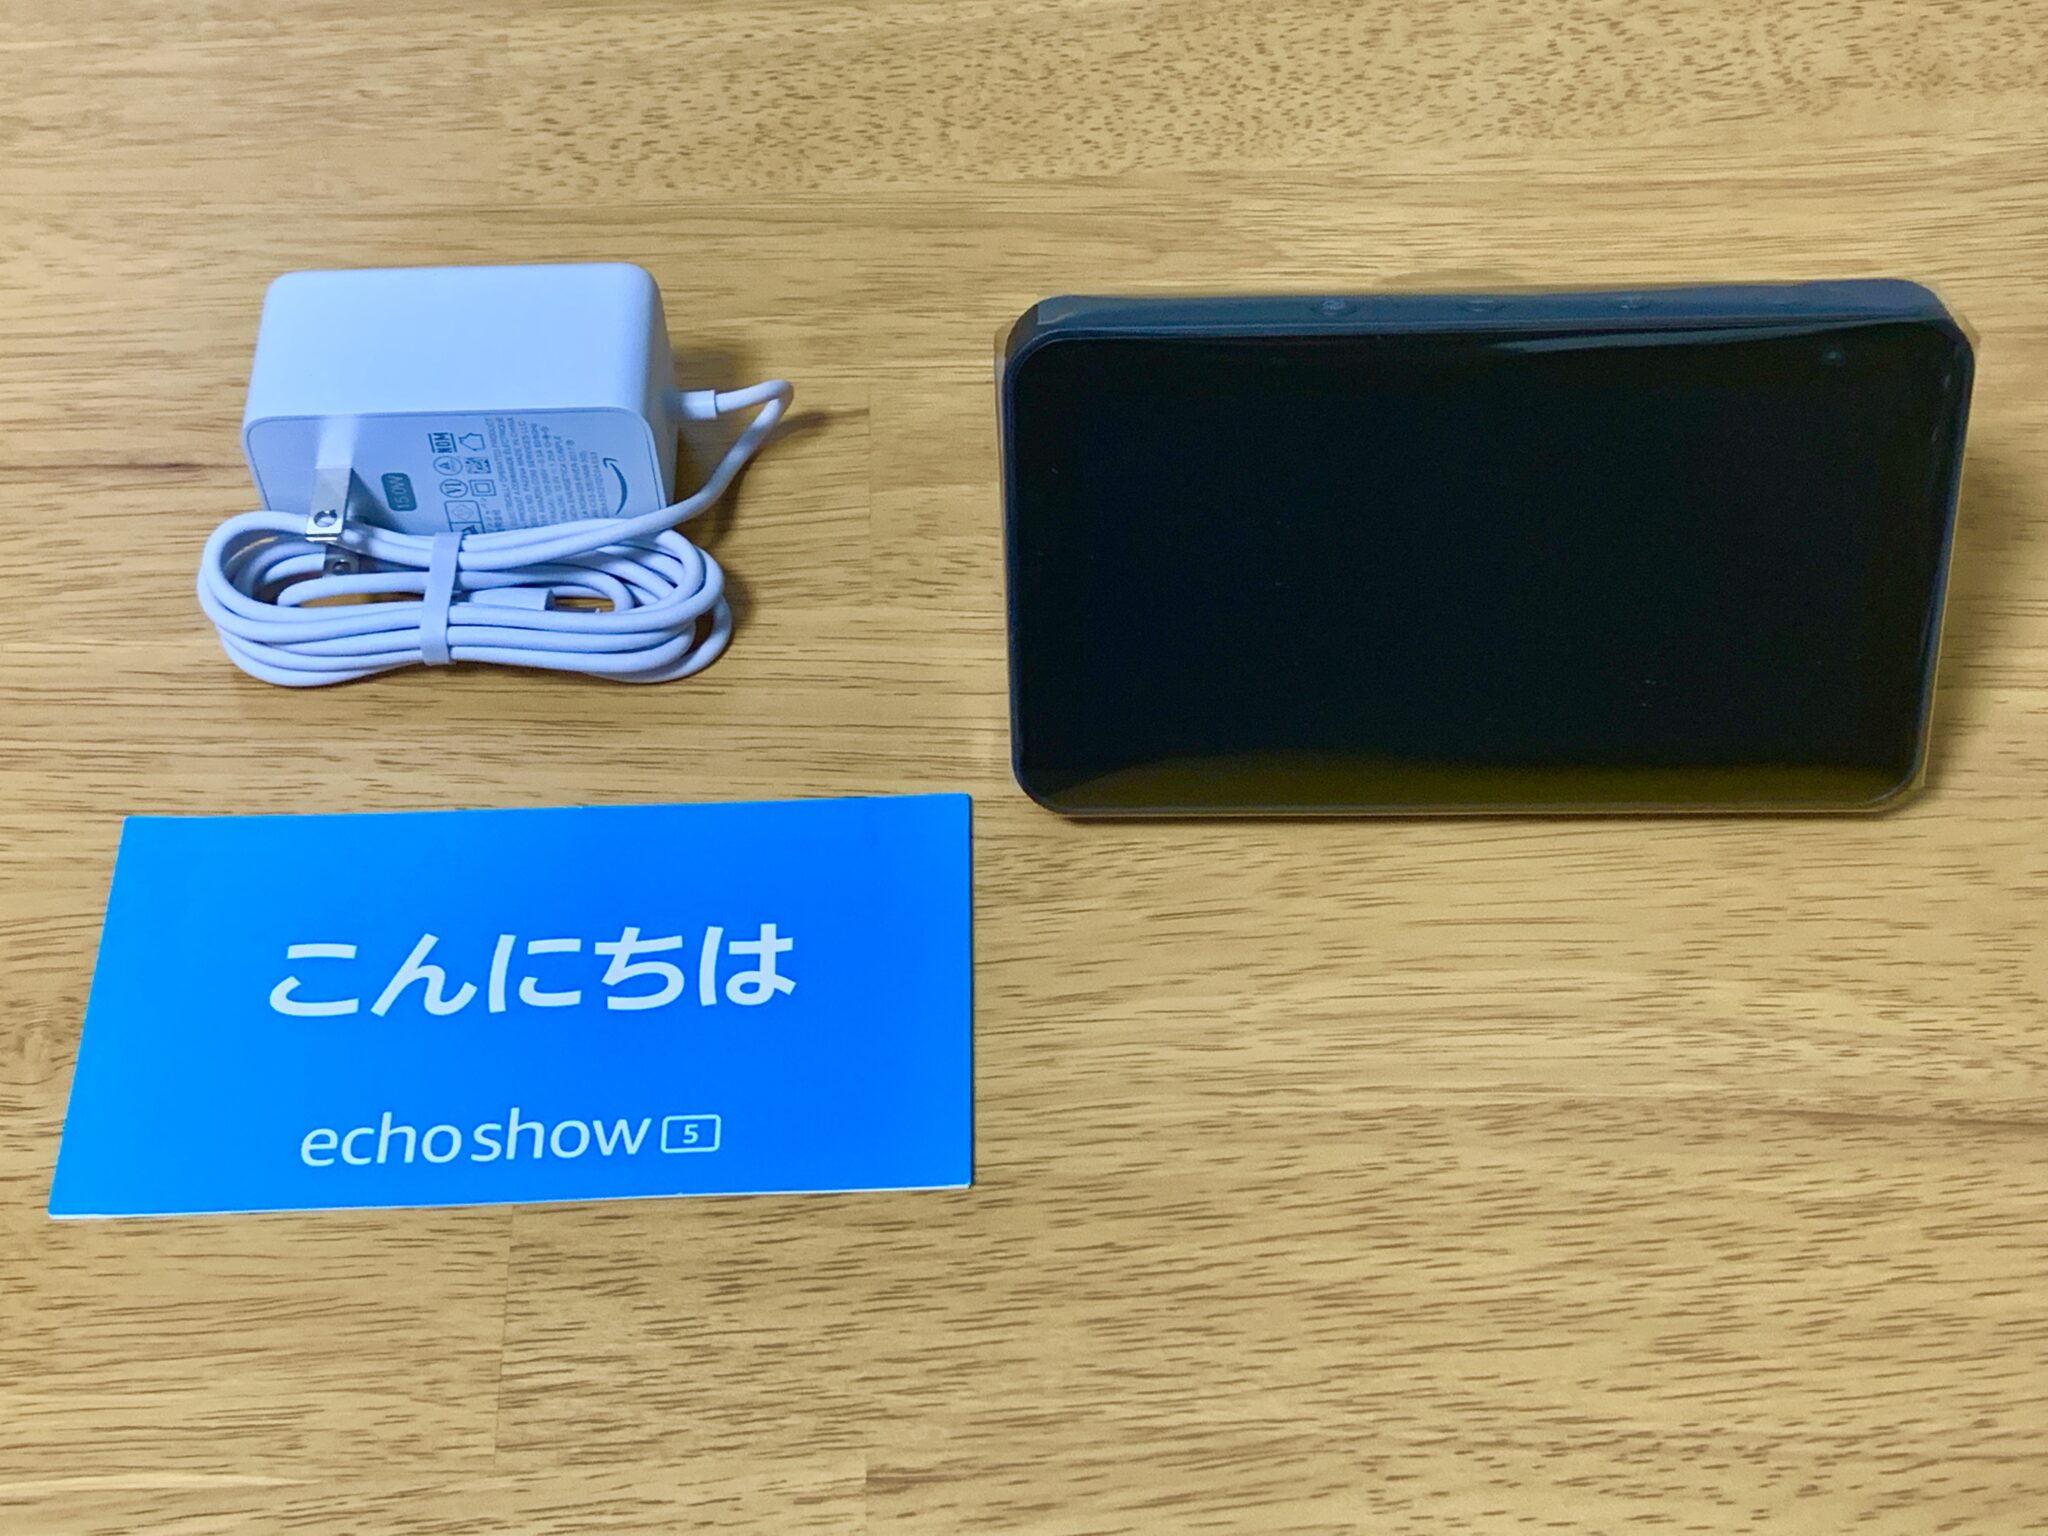 Echo Show 5でできること8選【便利機能レビュー】| motifyublog